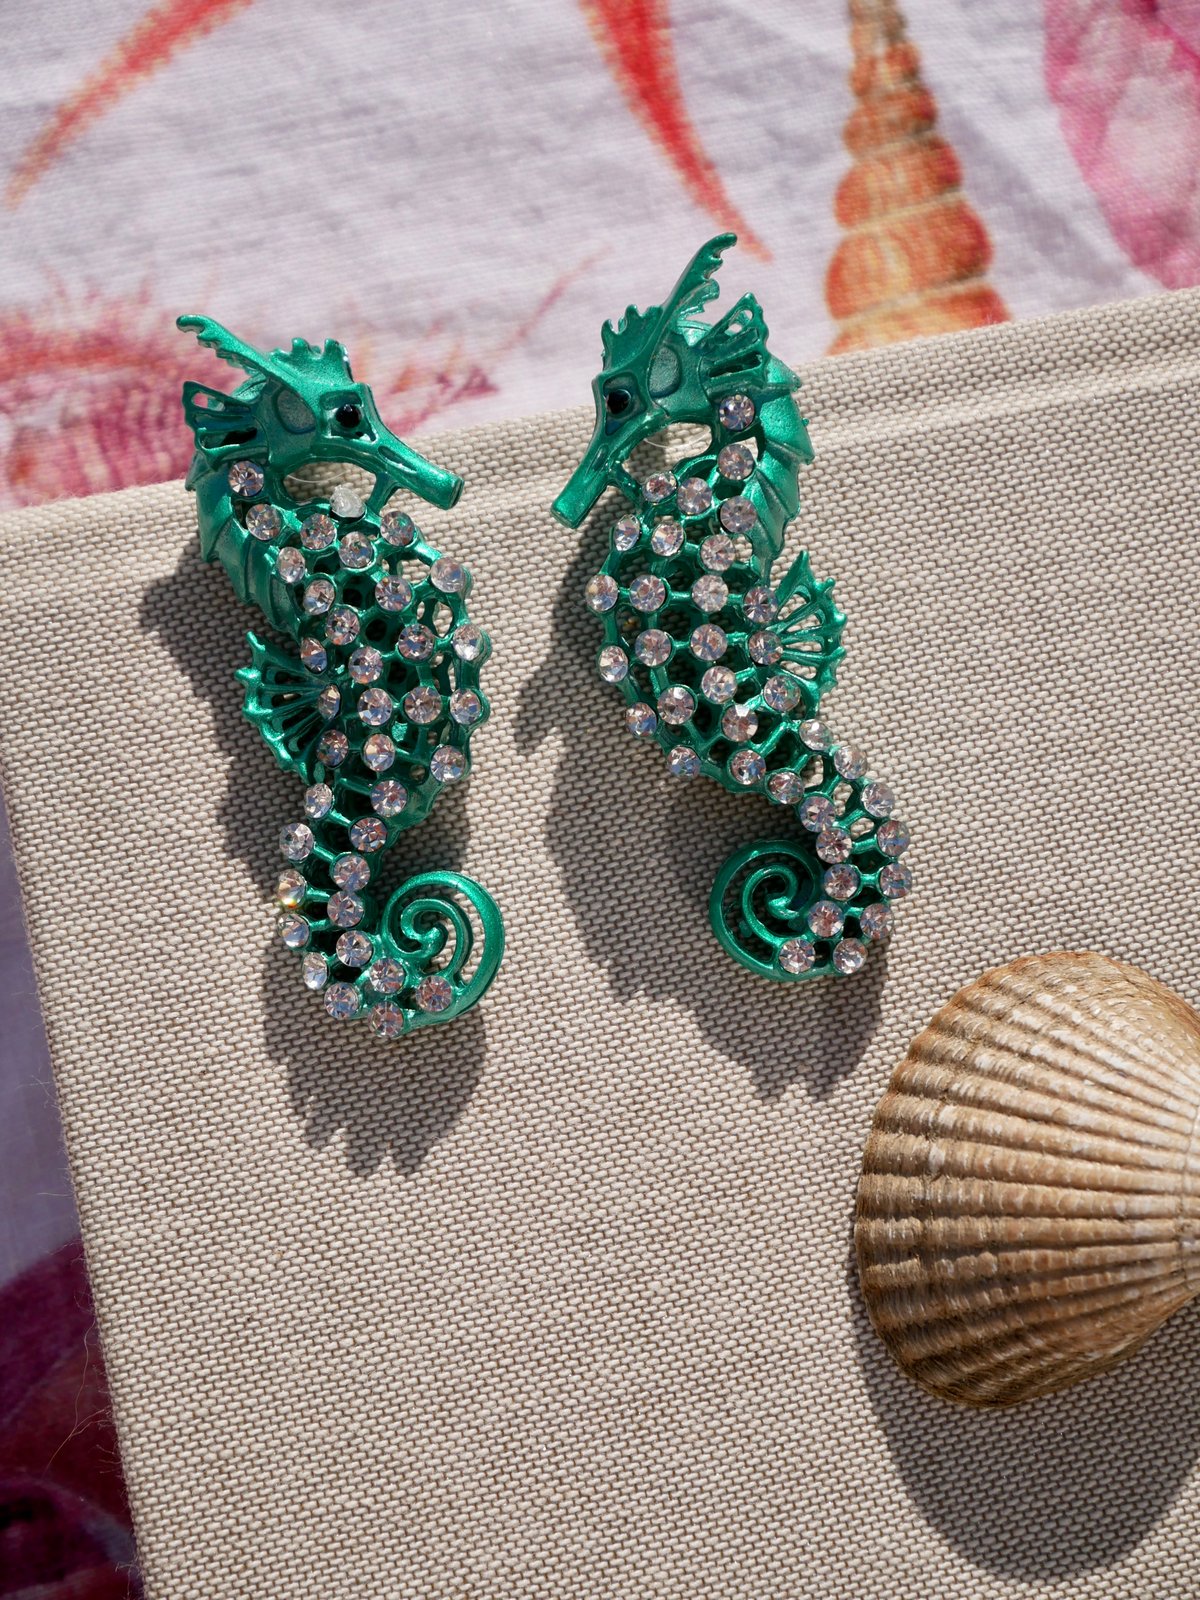 Turquoise Seahorse Earrings